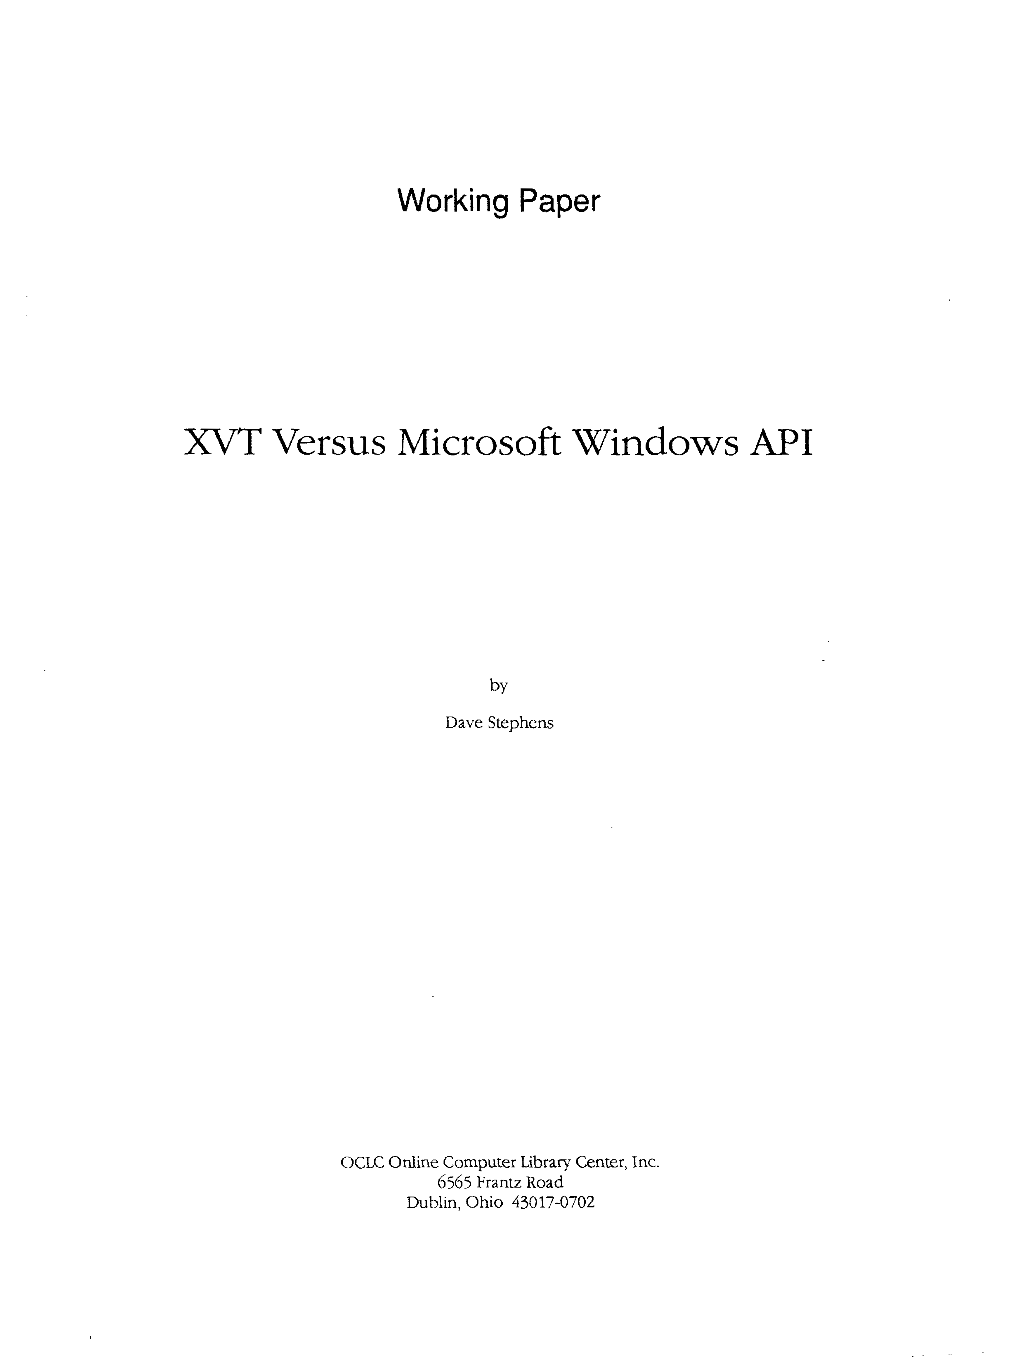 XVT Versus Microsoft Windows API